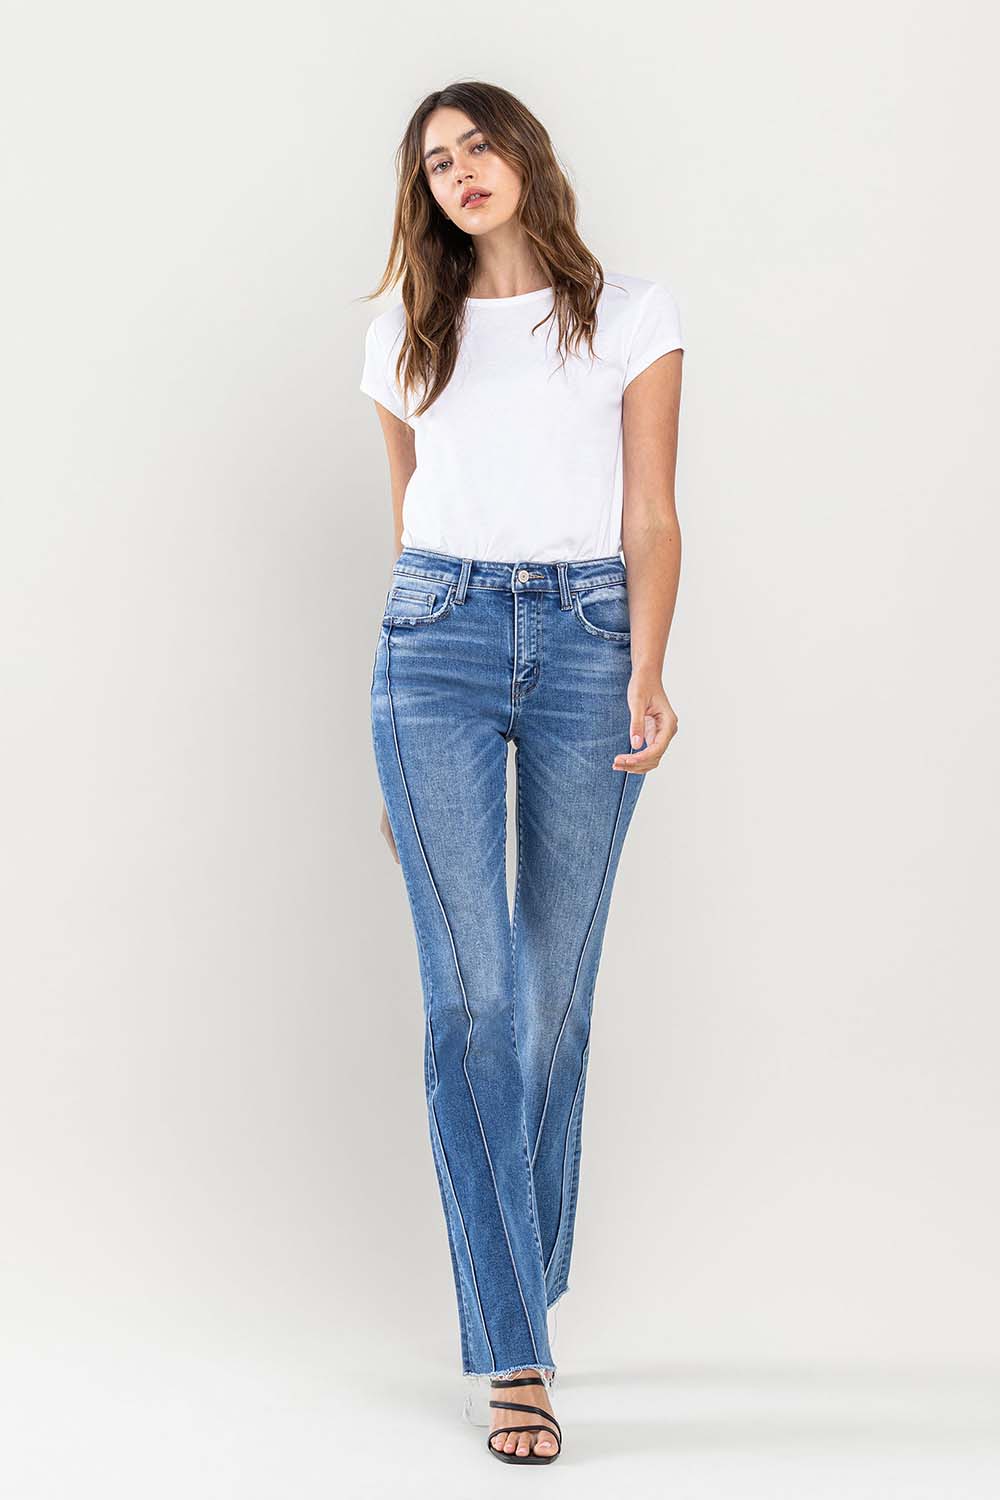 Cherish Seam Detail Bootcut Jeans | Vervet by Flying Monkey | T6088 - Lavender Hills BeautyVervet